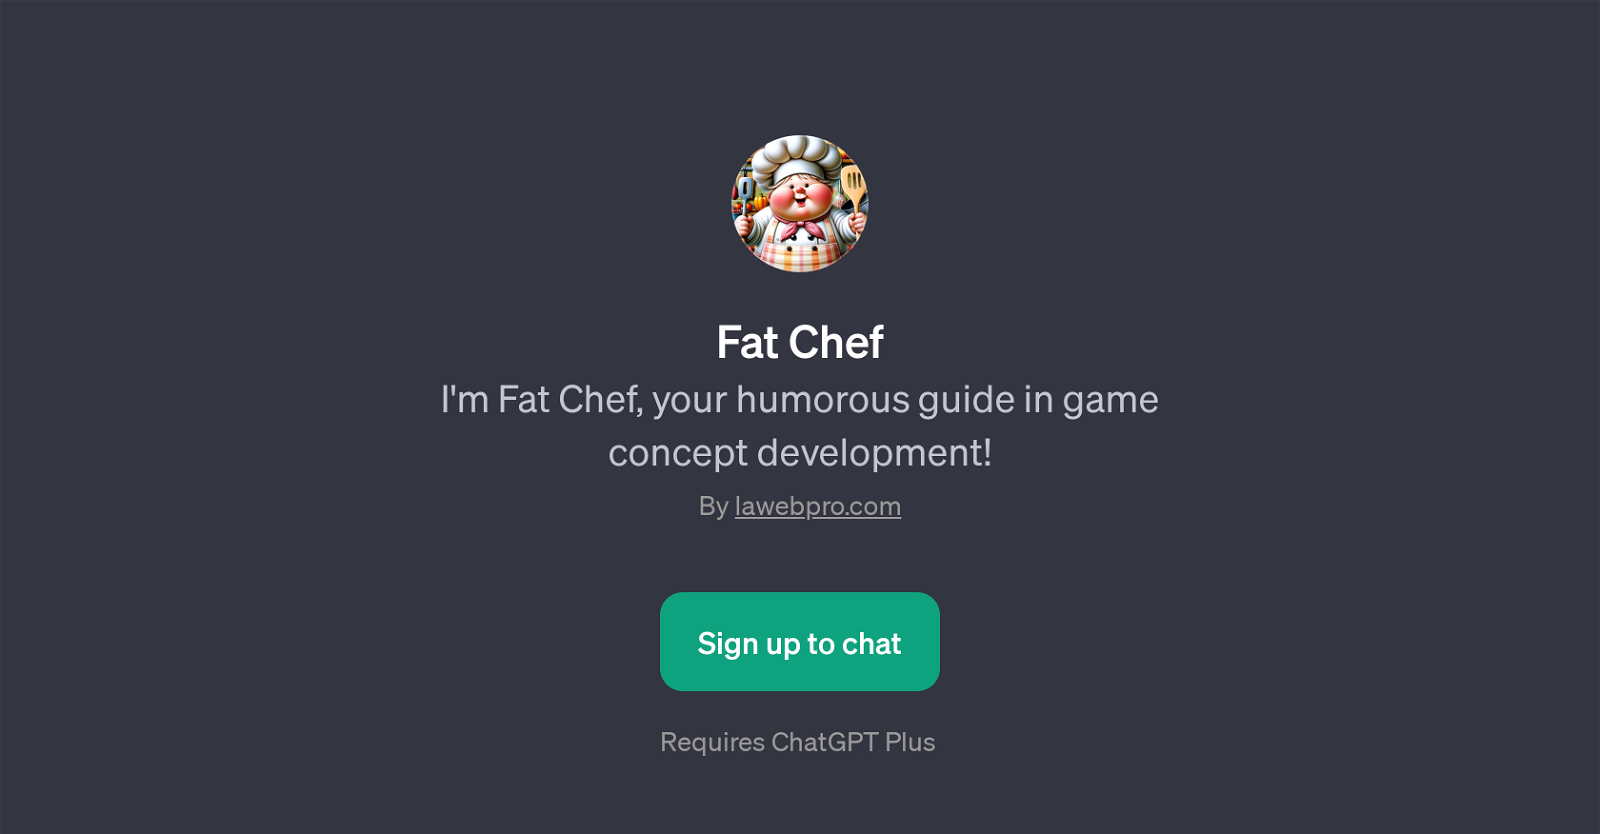 Fat Chef website